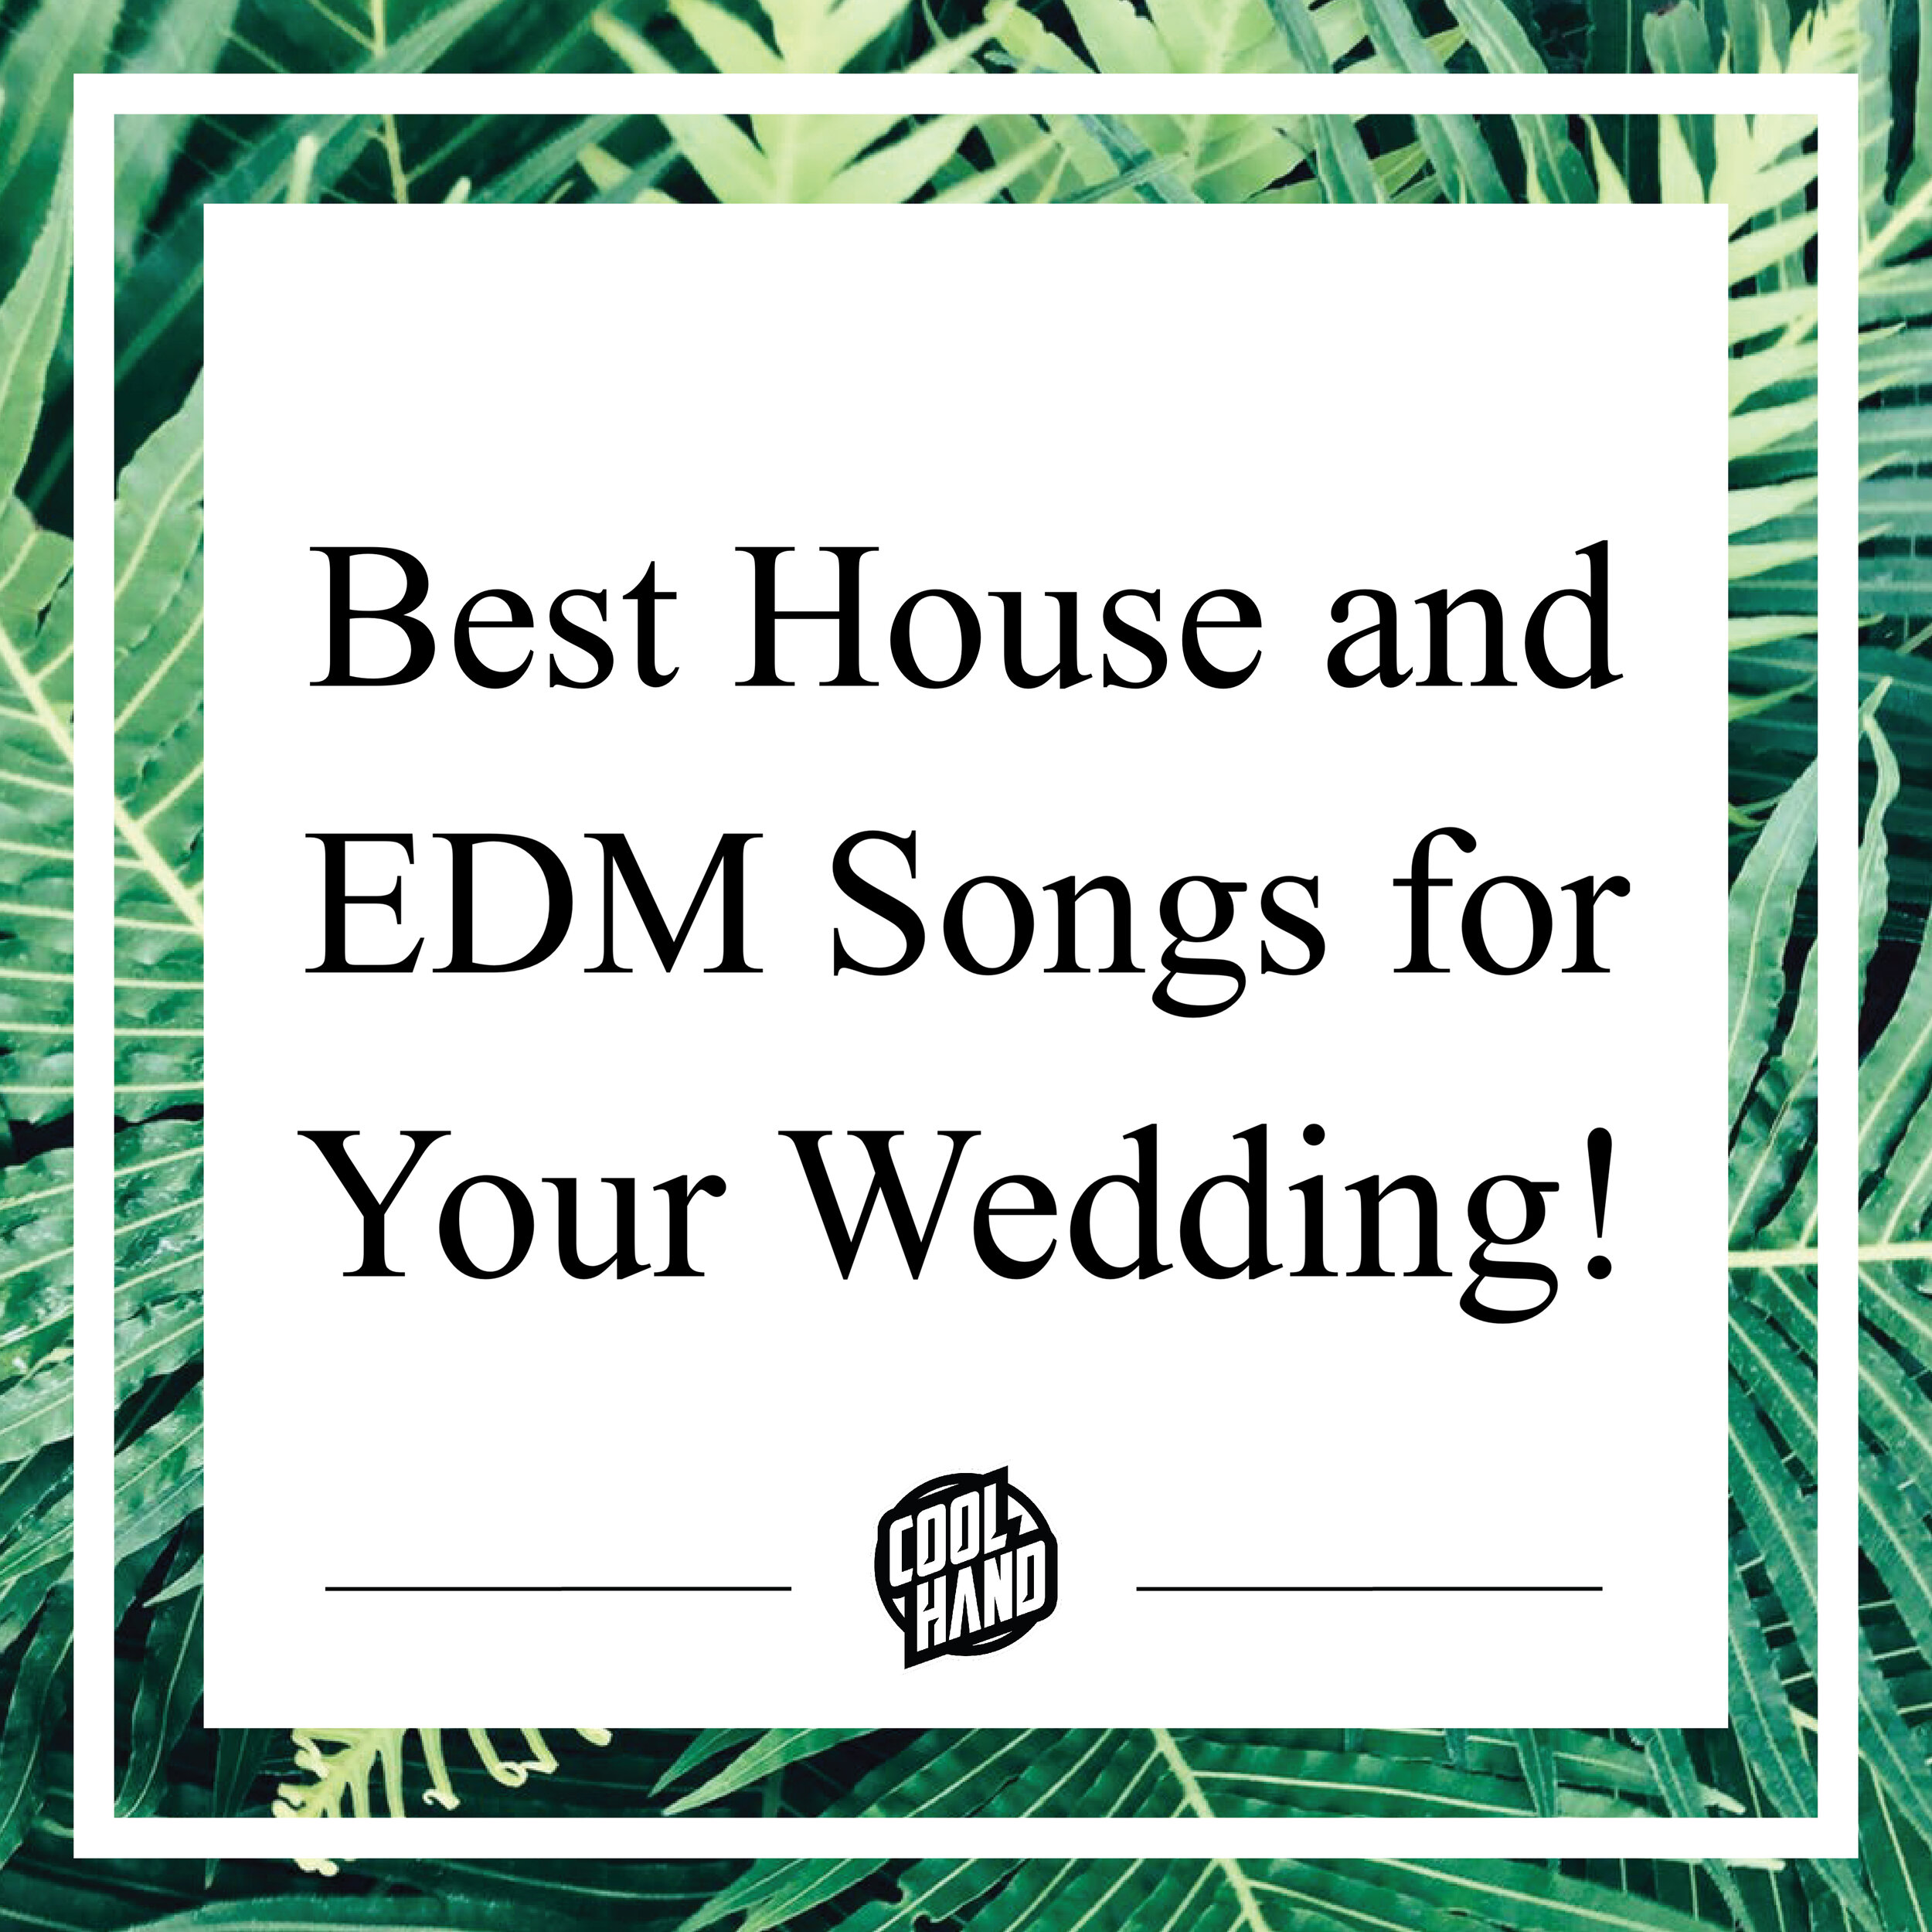 Wedding dance songs - Music For You